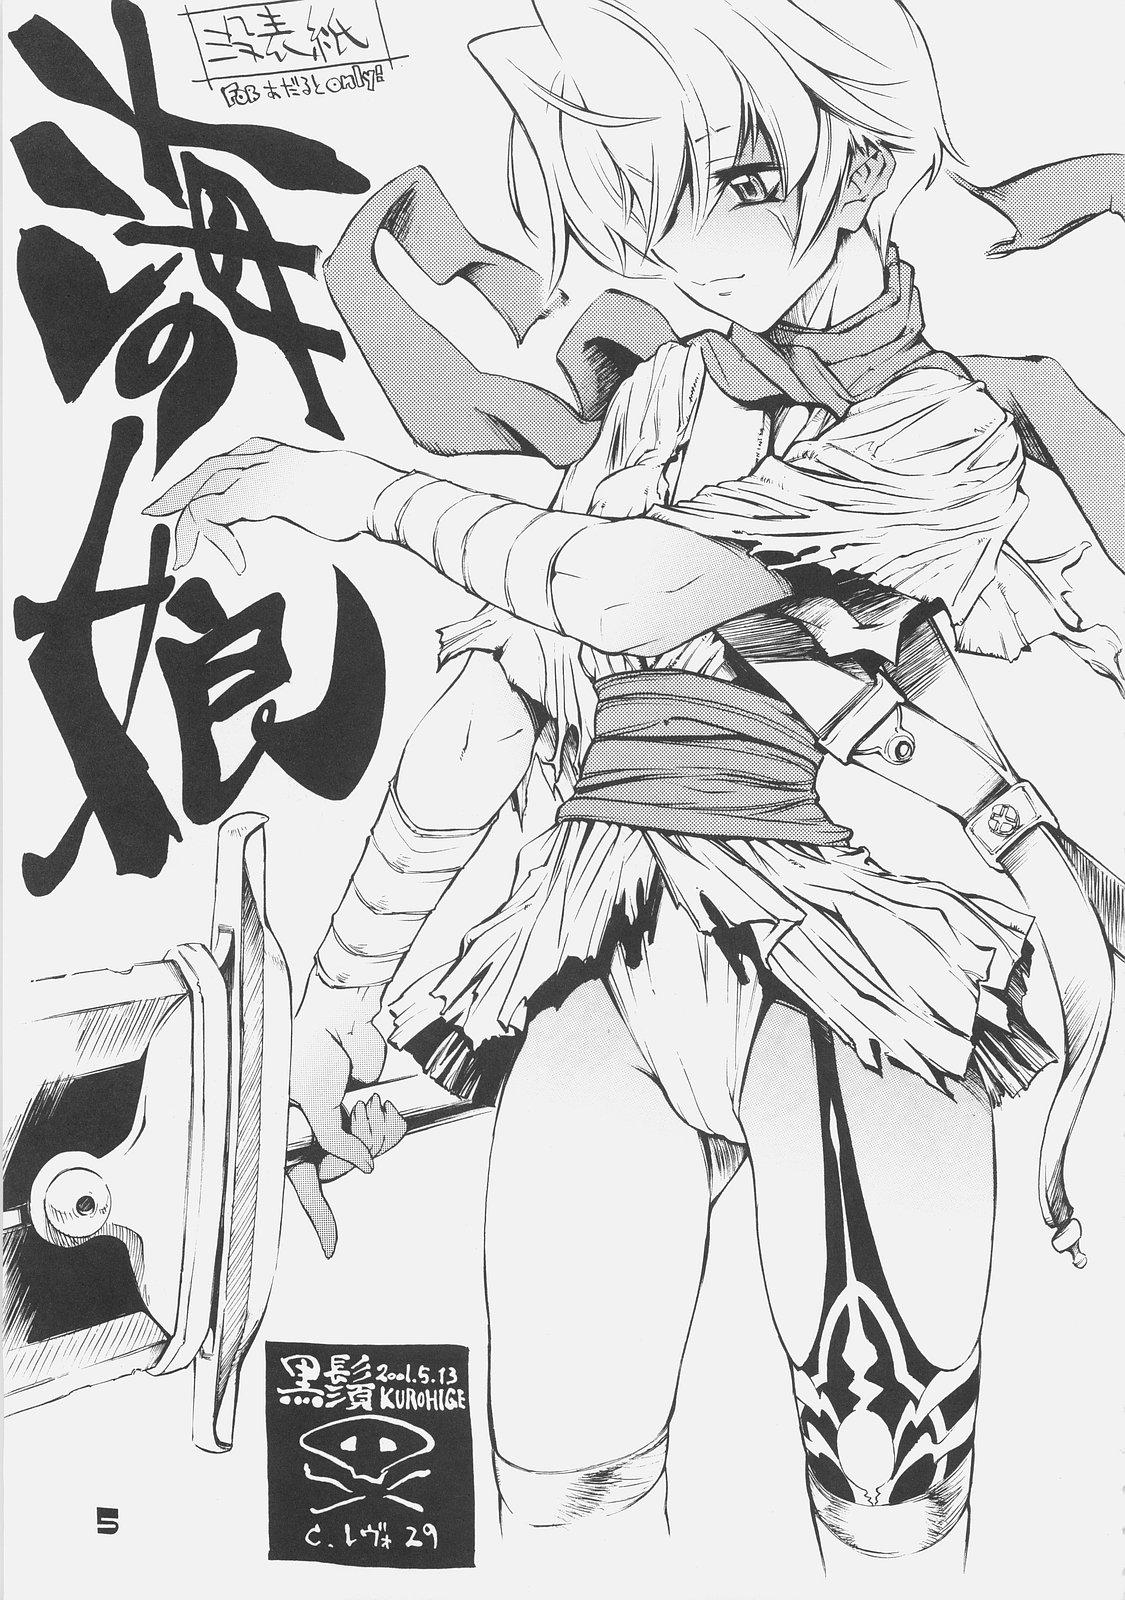 Scandal KUROHIGE SHINONOME TARO BEST SELECTION GRAPPLE GIRL - Darkstalkers Guilty gear Fucked - Page 4